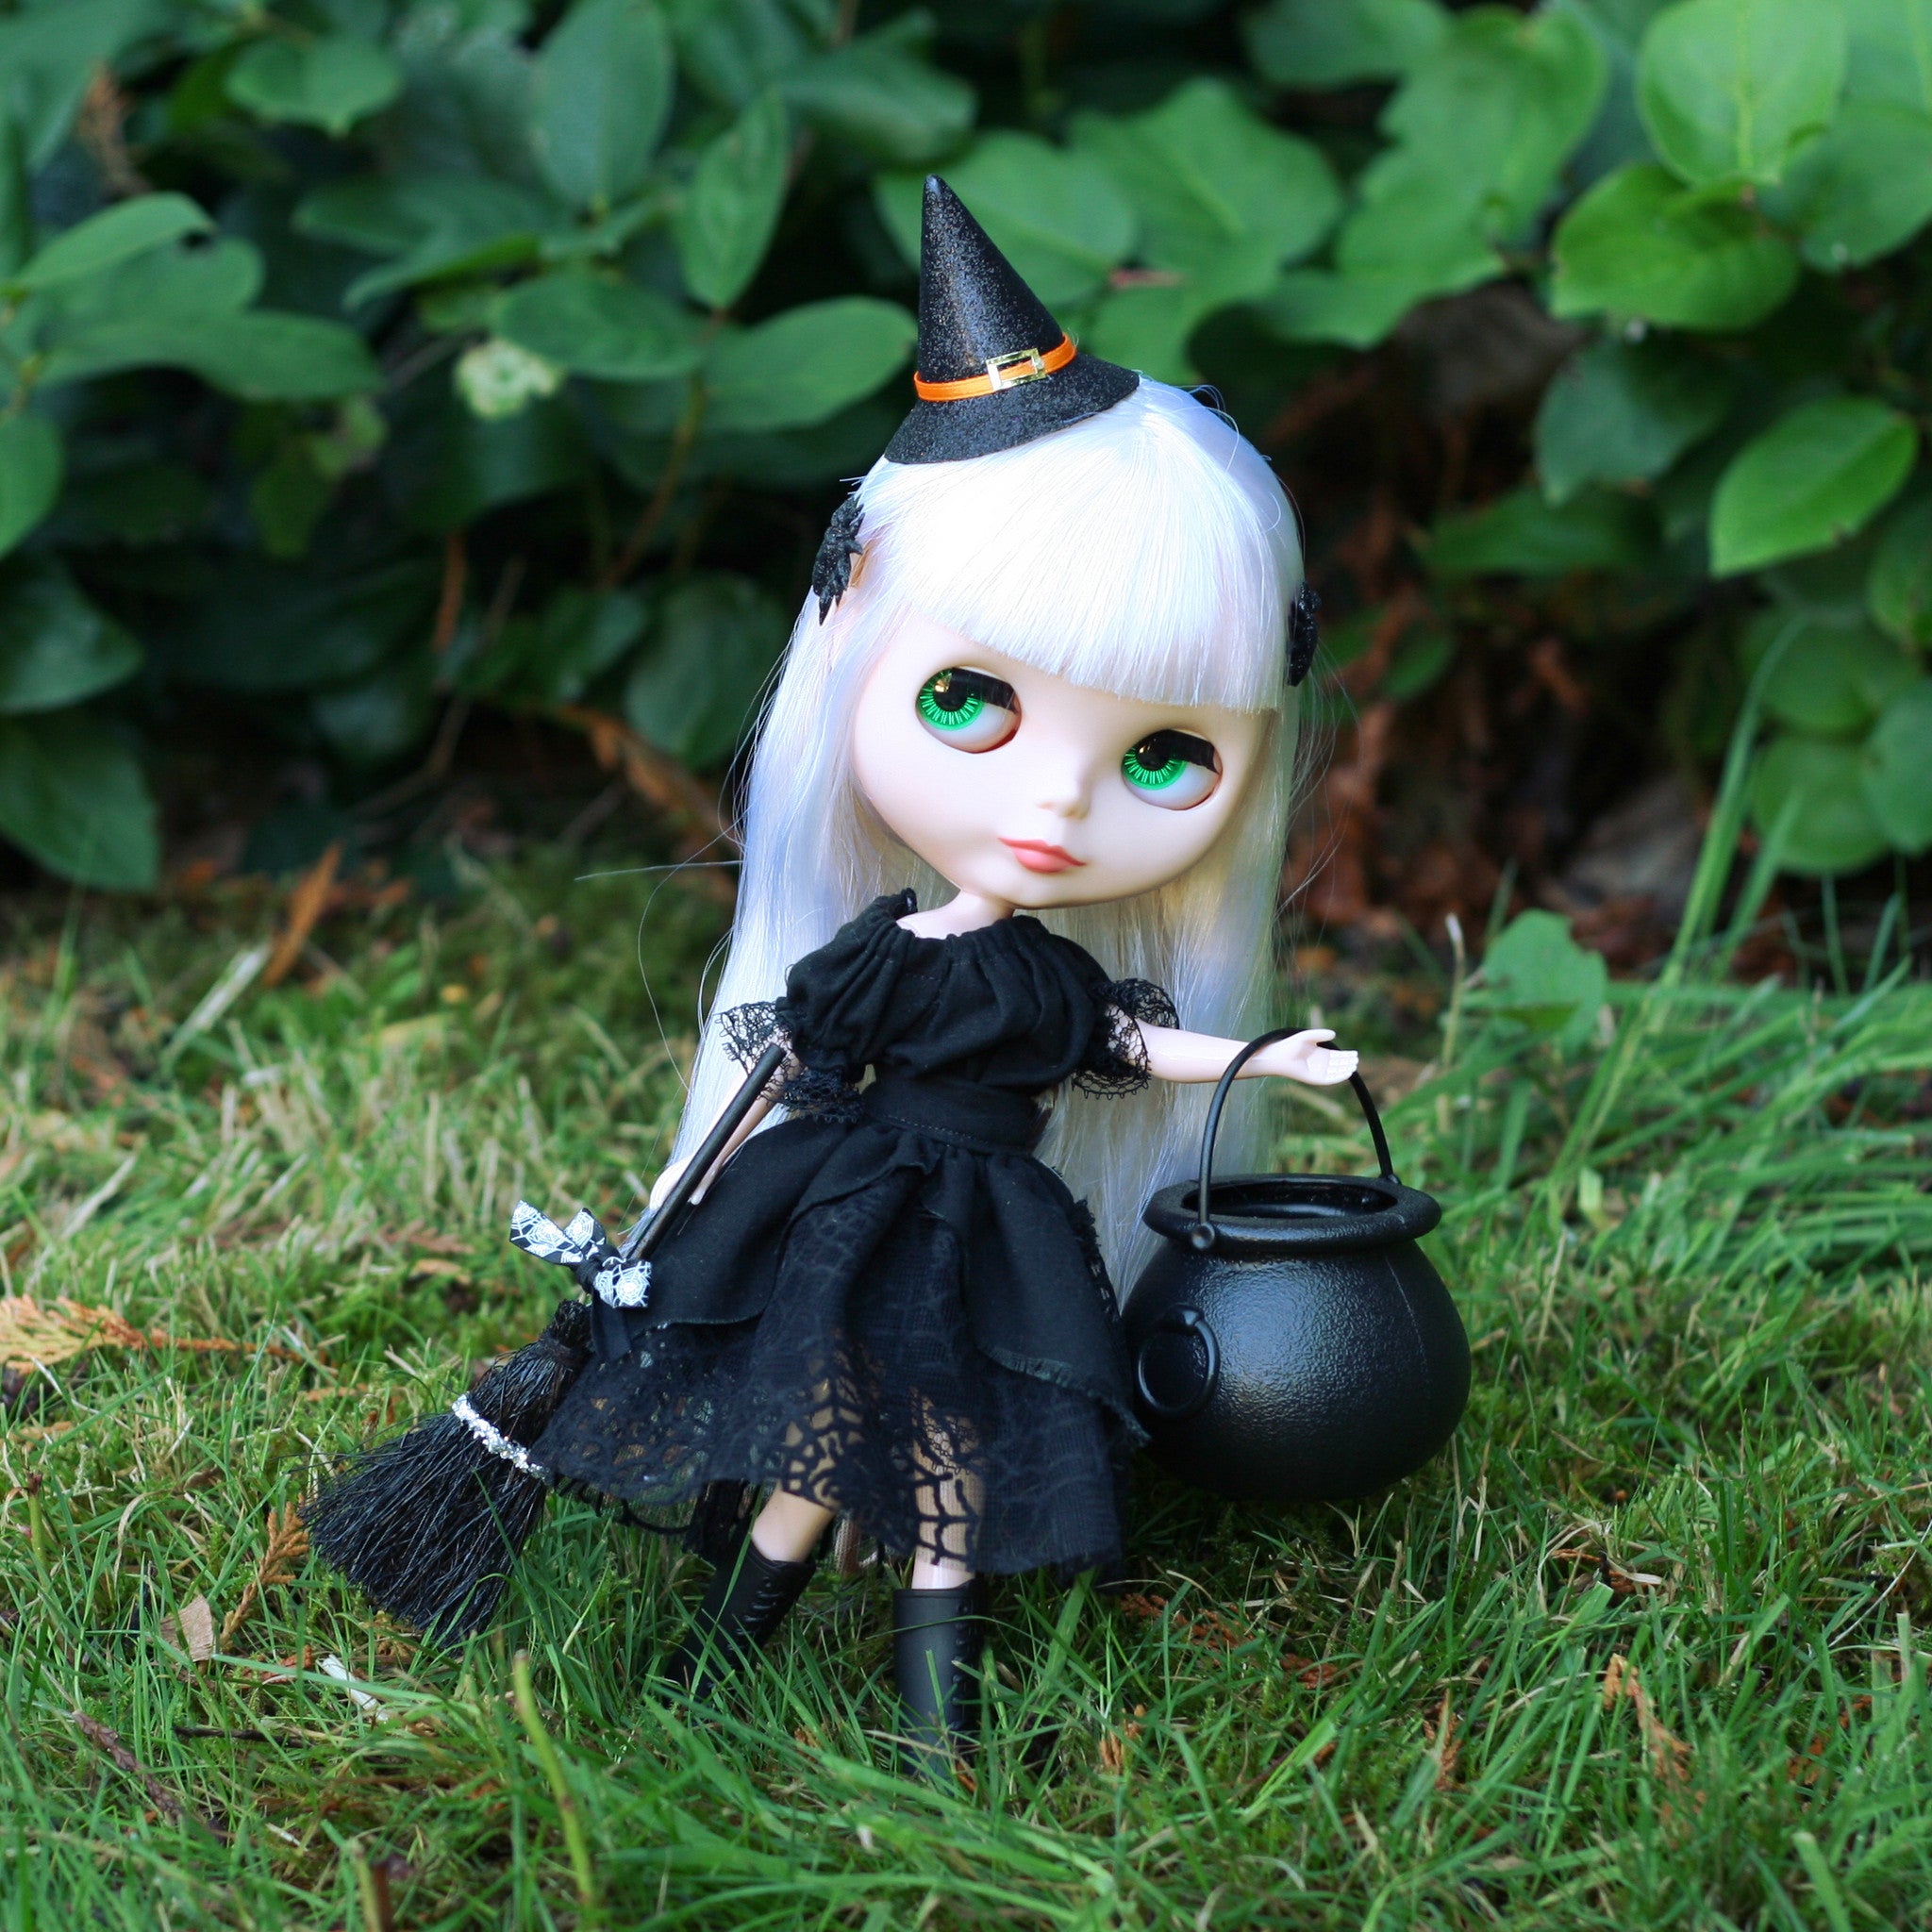 La situación. - Página 11 Blythe-witch-dress-black-halloween-costume-outfit_2048x2048